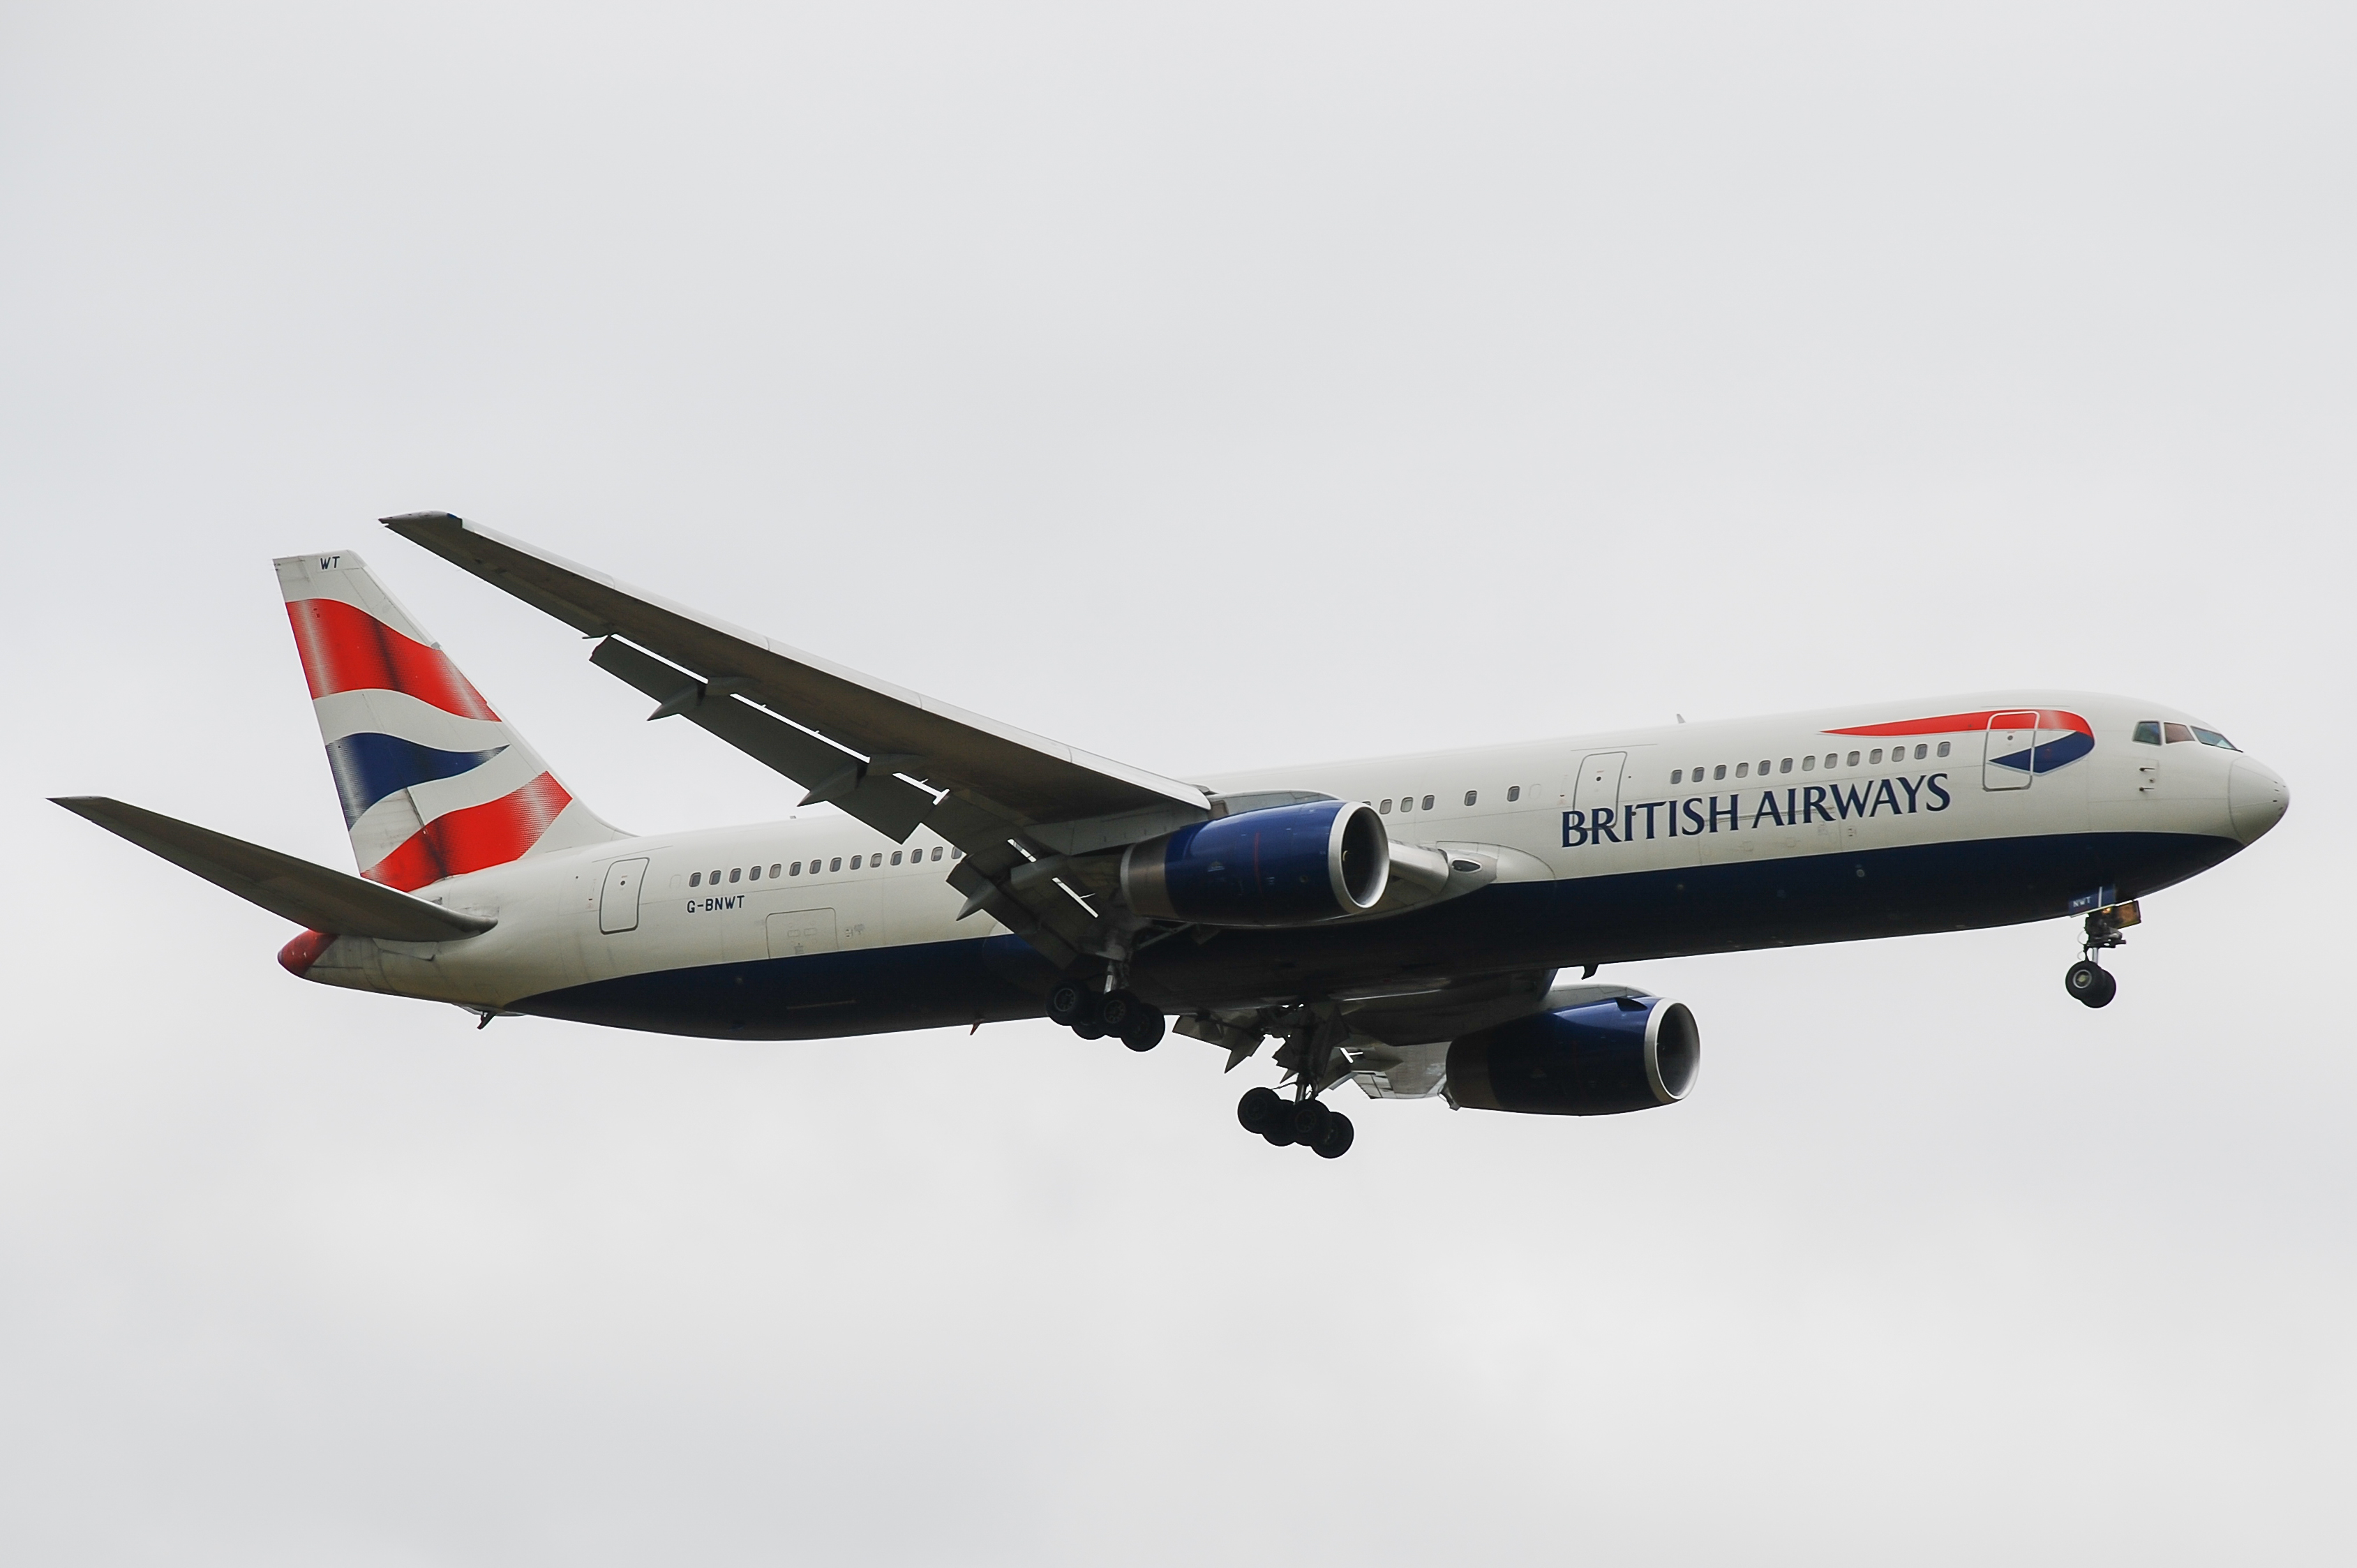 G-BNWT/GBNWT British Airways Boeing 767 Airframe Information - AVSpotters.com